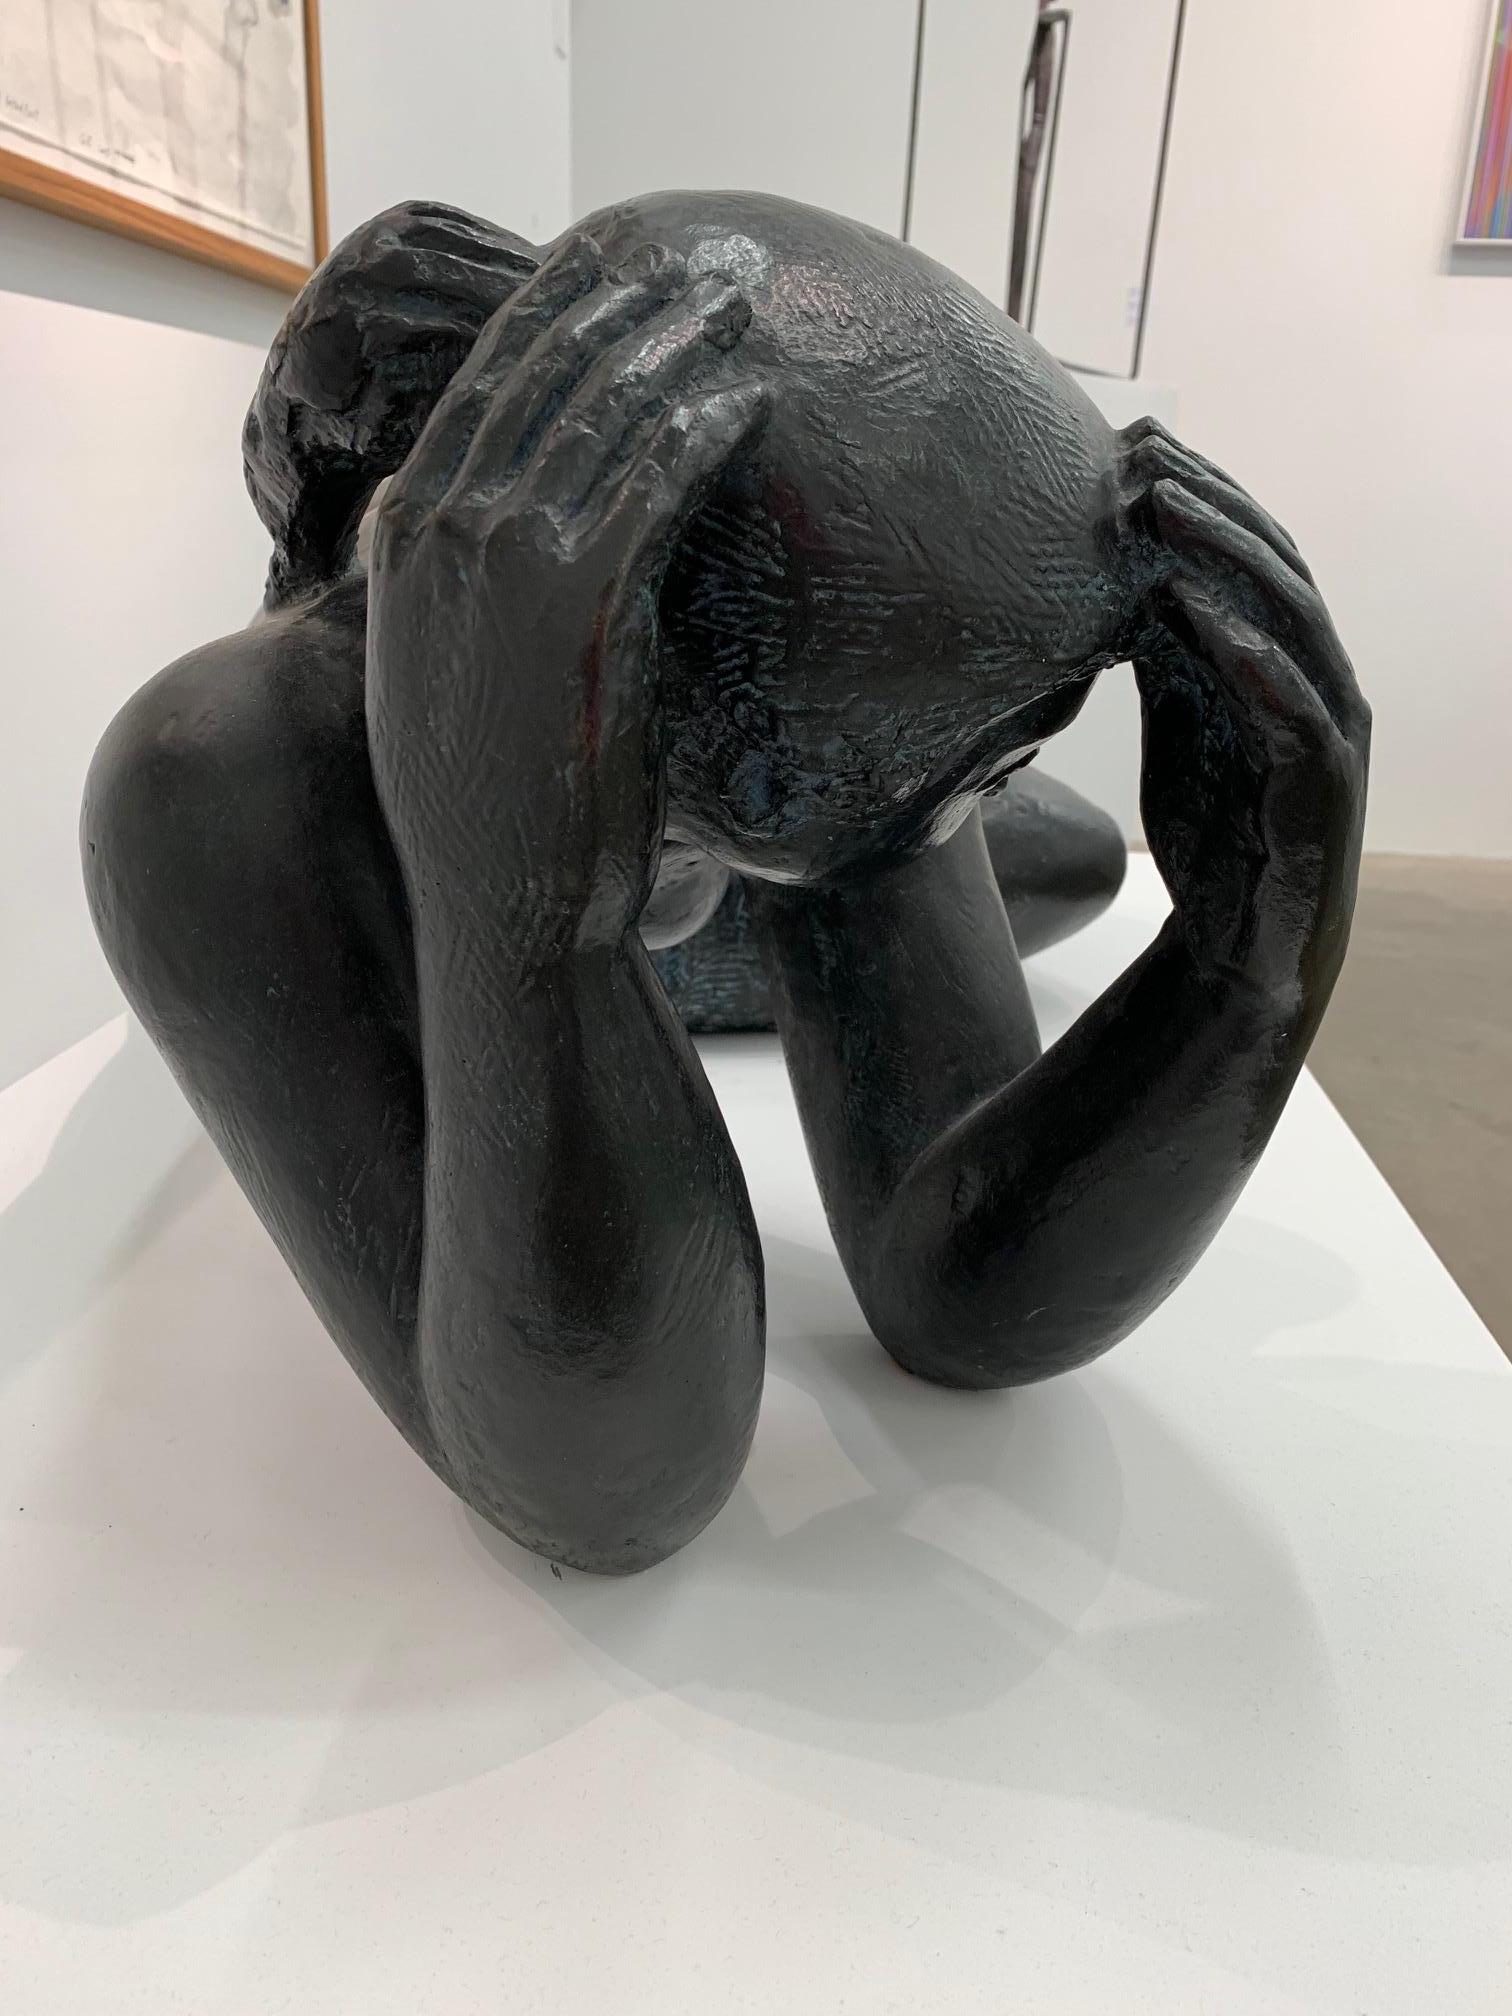 « Femme de Tours », bronze, sculpture figurative féminine couchée - Or Figurative Sculpture par Antoniucci Volti